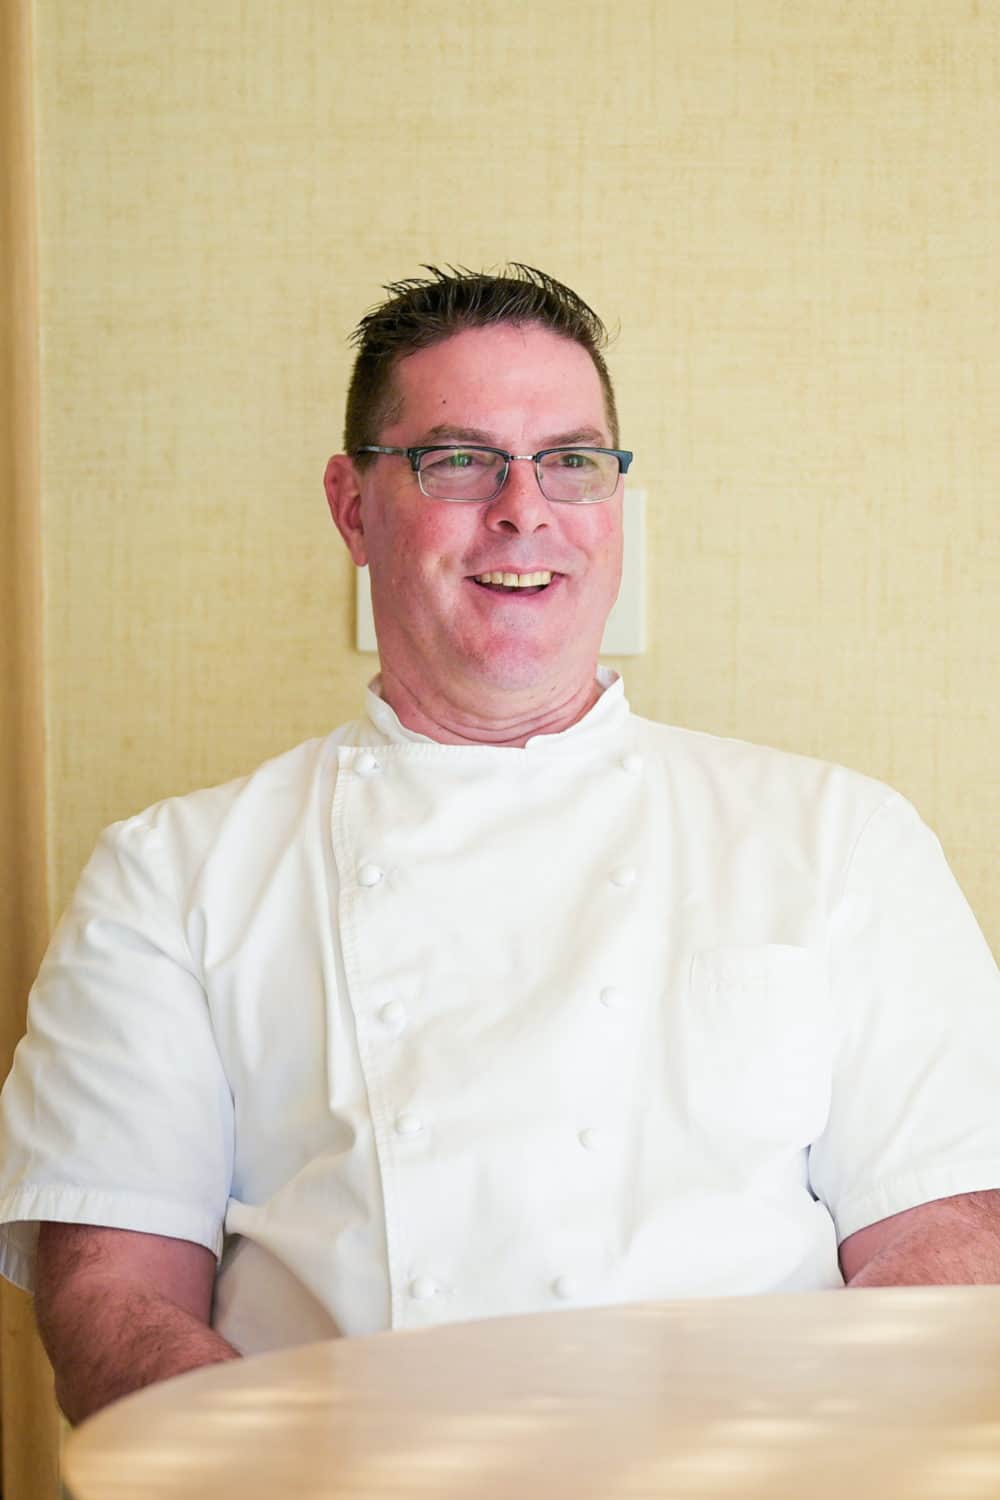 Robert Curry - Executive Chef - Auberge du Soleil, Napa Valley
Robert Curry - Executive Chef - Auberge du Soleil, Napa Valley